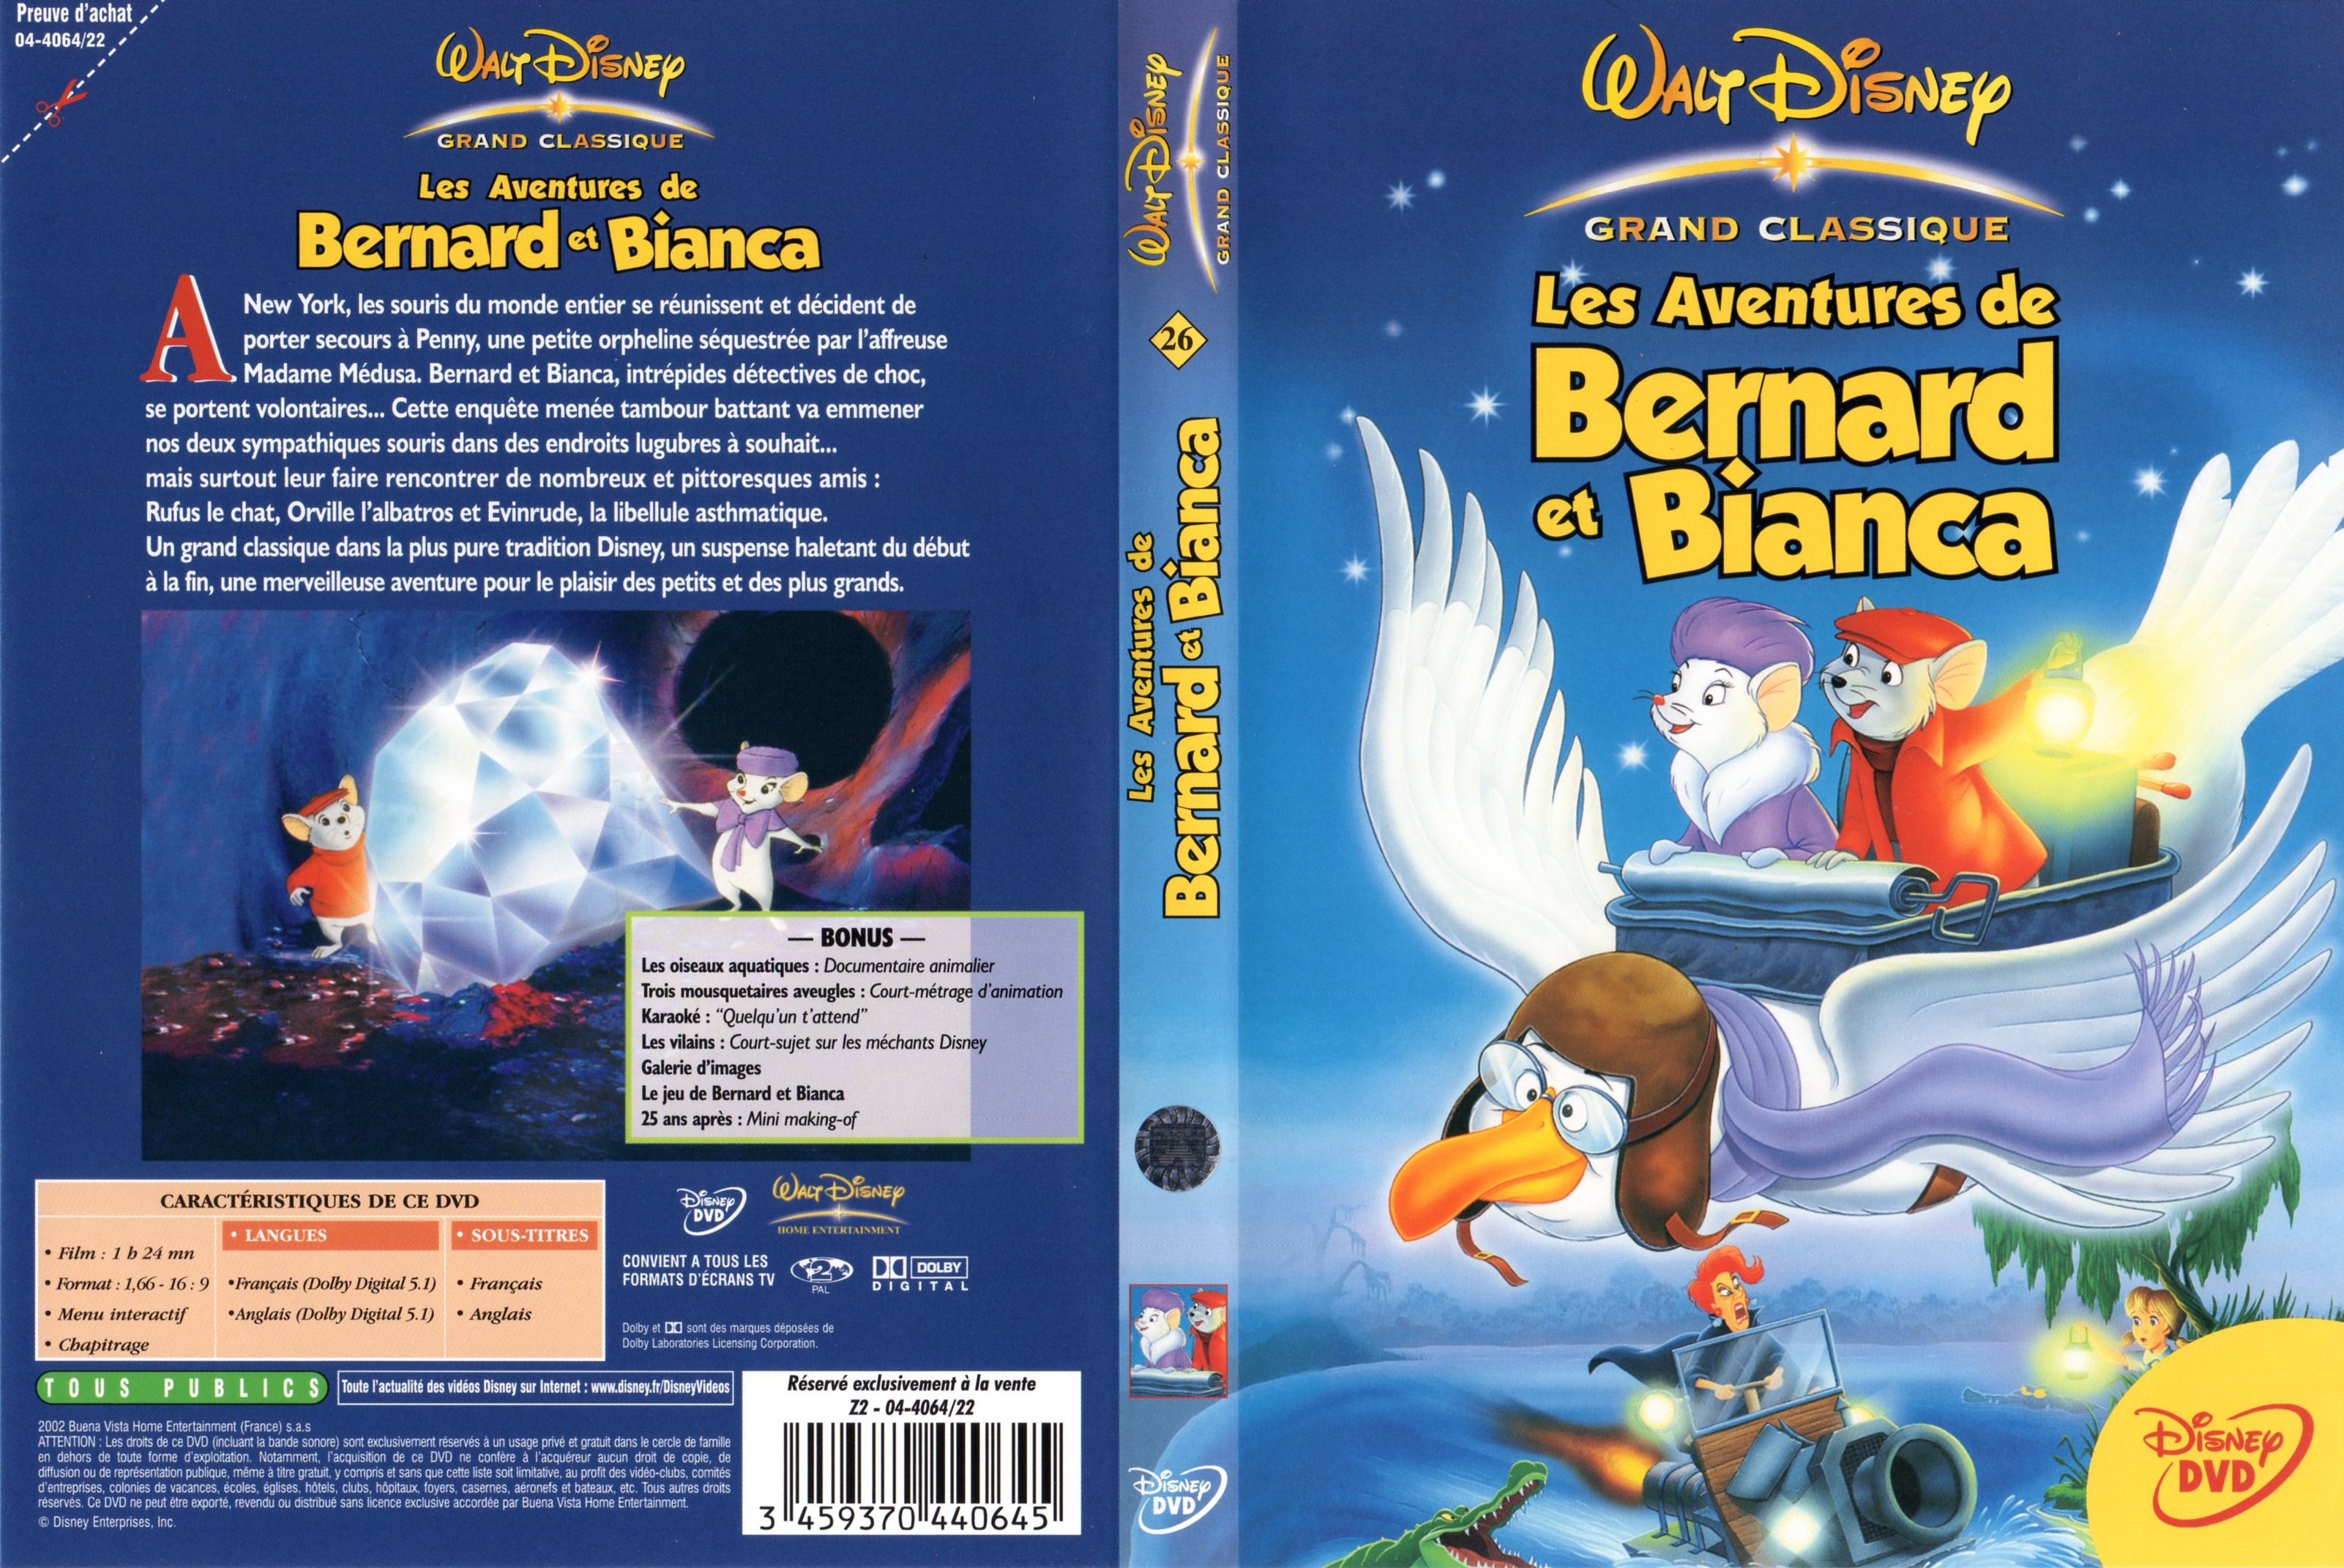 Jaquette DVD Les aventures de Bernard et Bianca